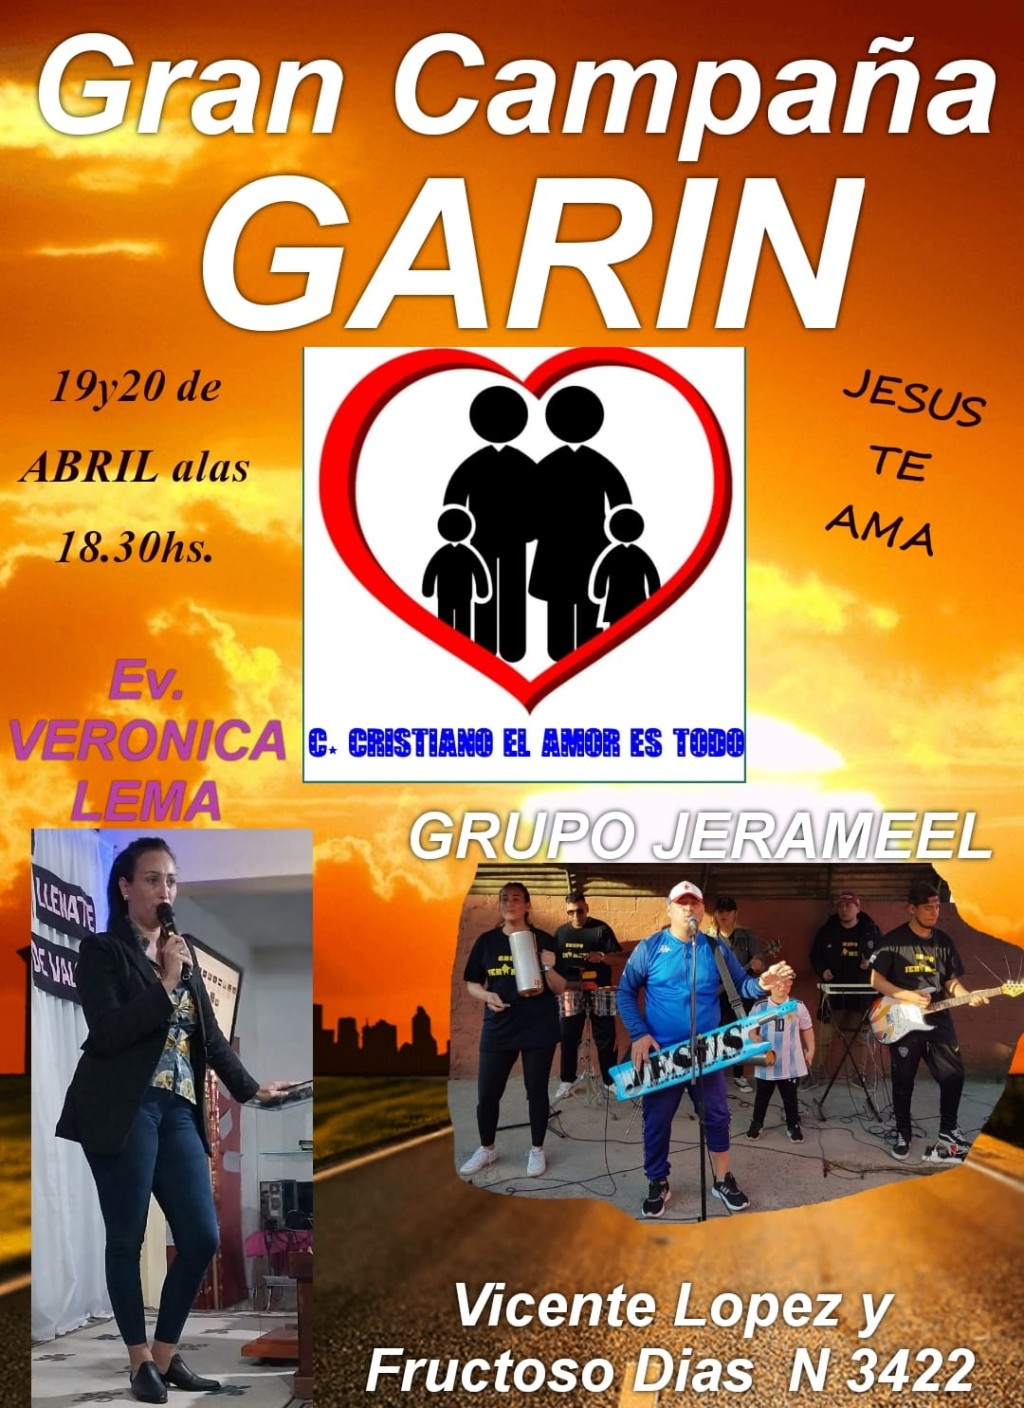 Gran Campaña Evangelística en Garín Organizada por el Centro Cristiano 